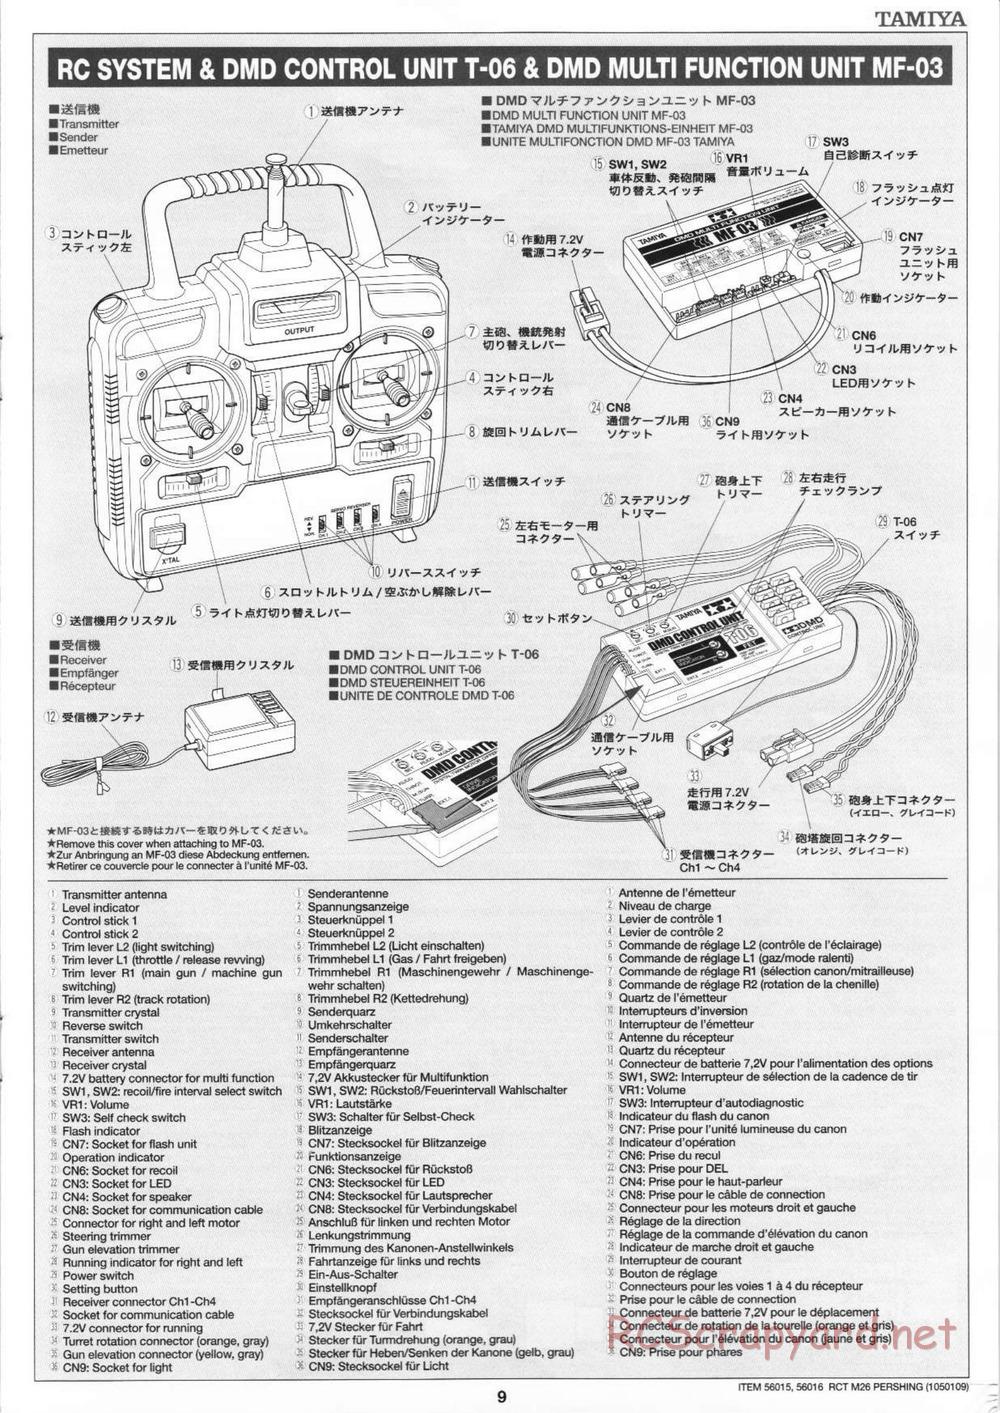 Tamiya - M26 Pershing - 1/16 Scale Chassis - Manual - Page 9